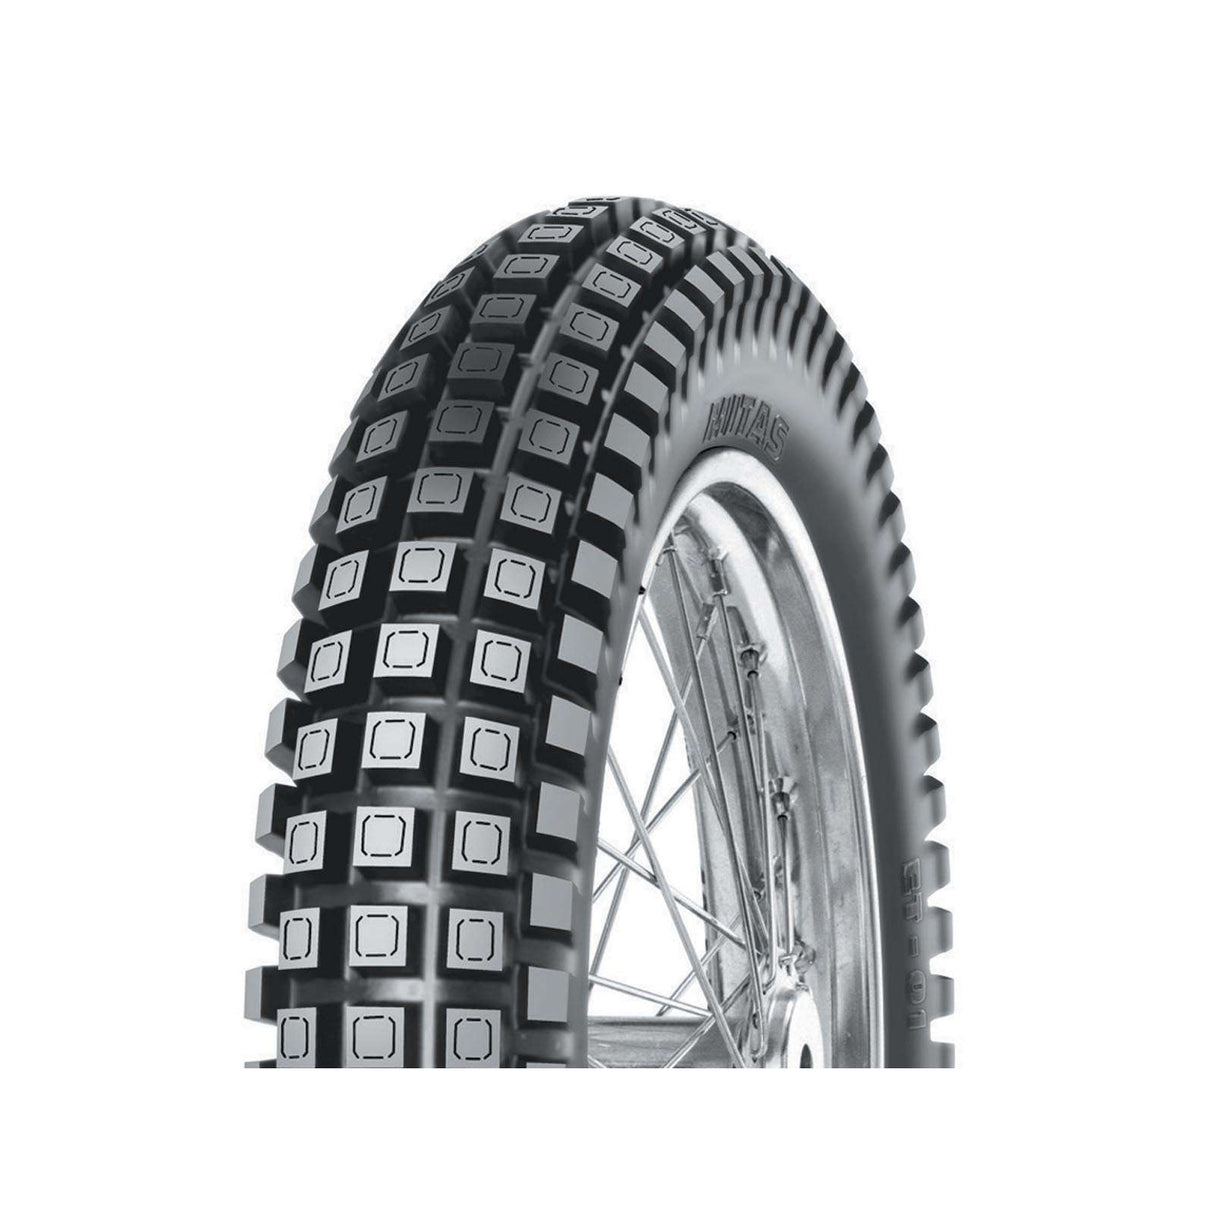 4.00-18 ET01 Trials Mitas Enduro Rear Tyre